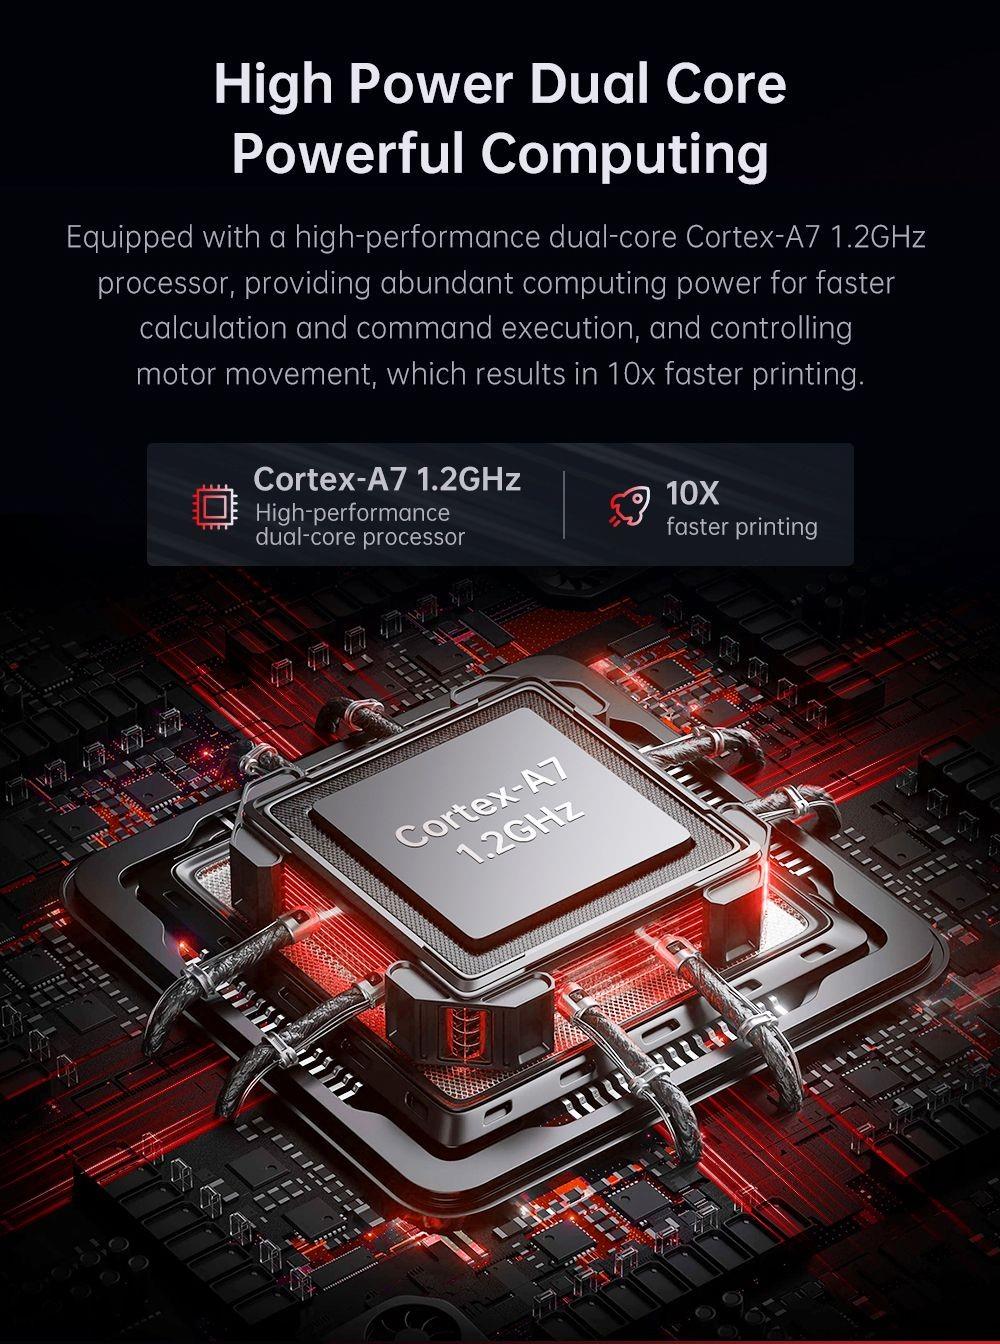 Anycubic Kobra 2 Pro 3D Printer, 25-punts automatische nivellering, 500mm/s maximale printsnelheid, 250x220x220mm